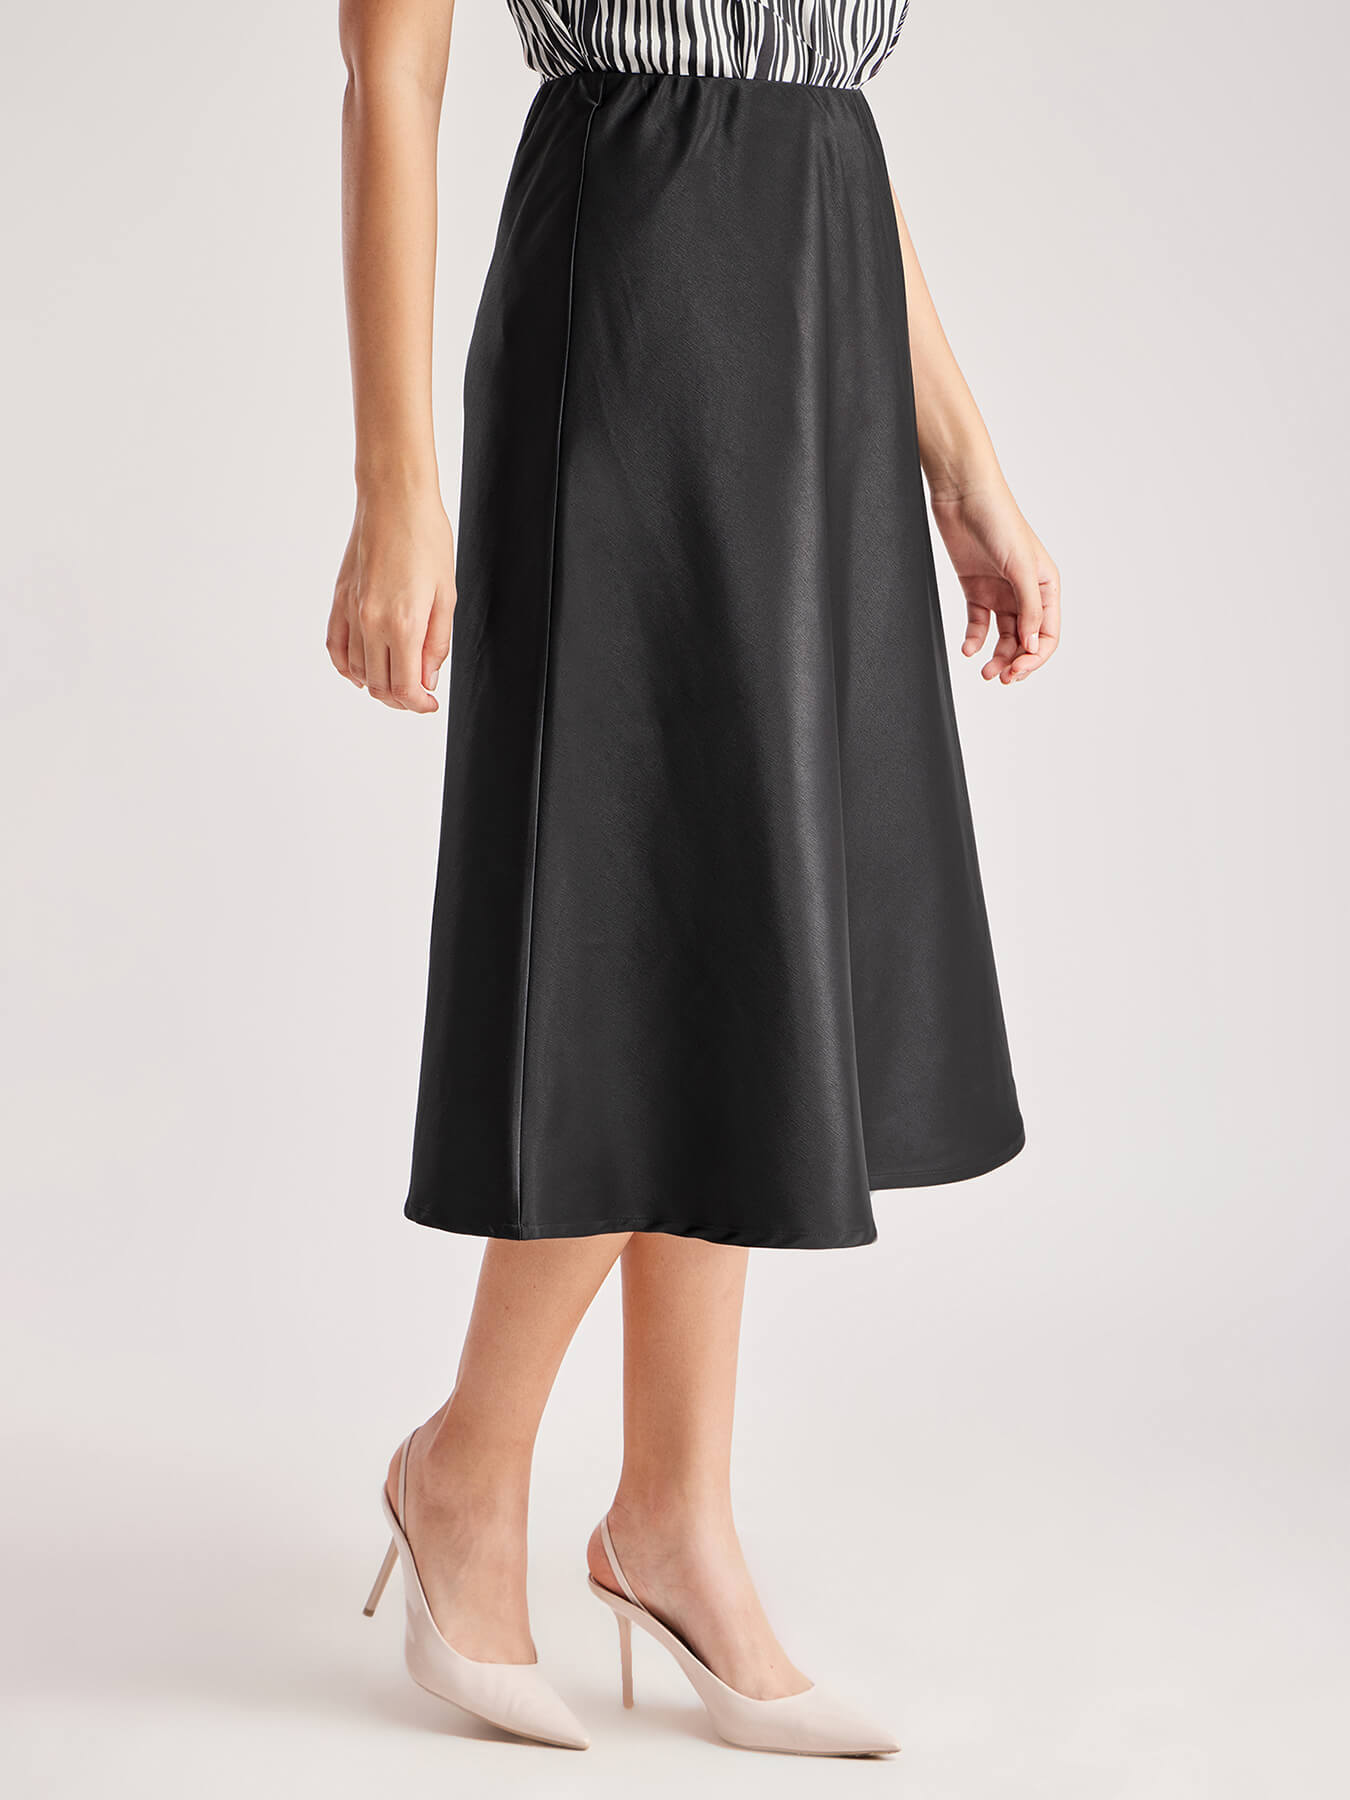 Satin Elasticated A Line Skirt - Black